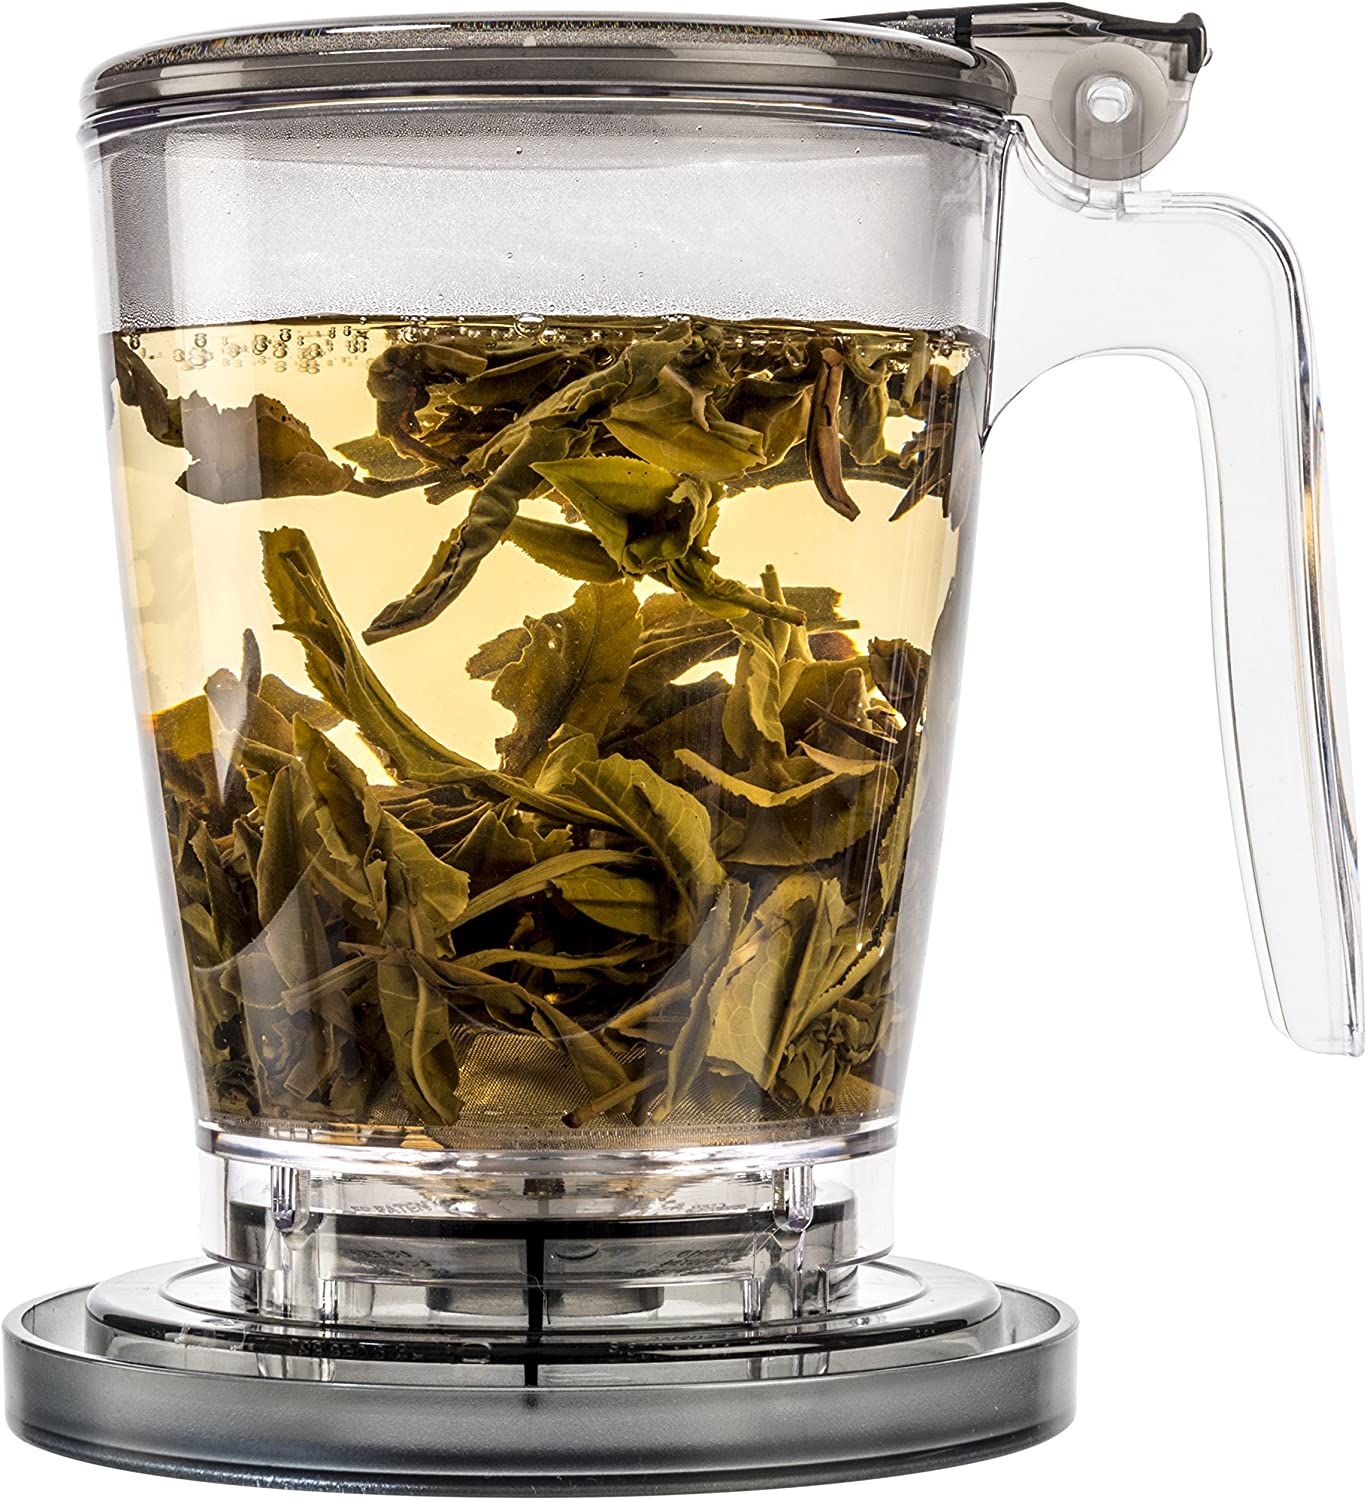 loose leaf tea maker The Cup of Life